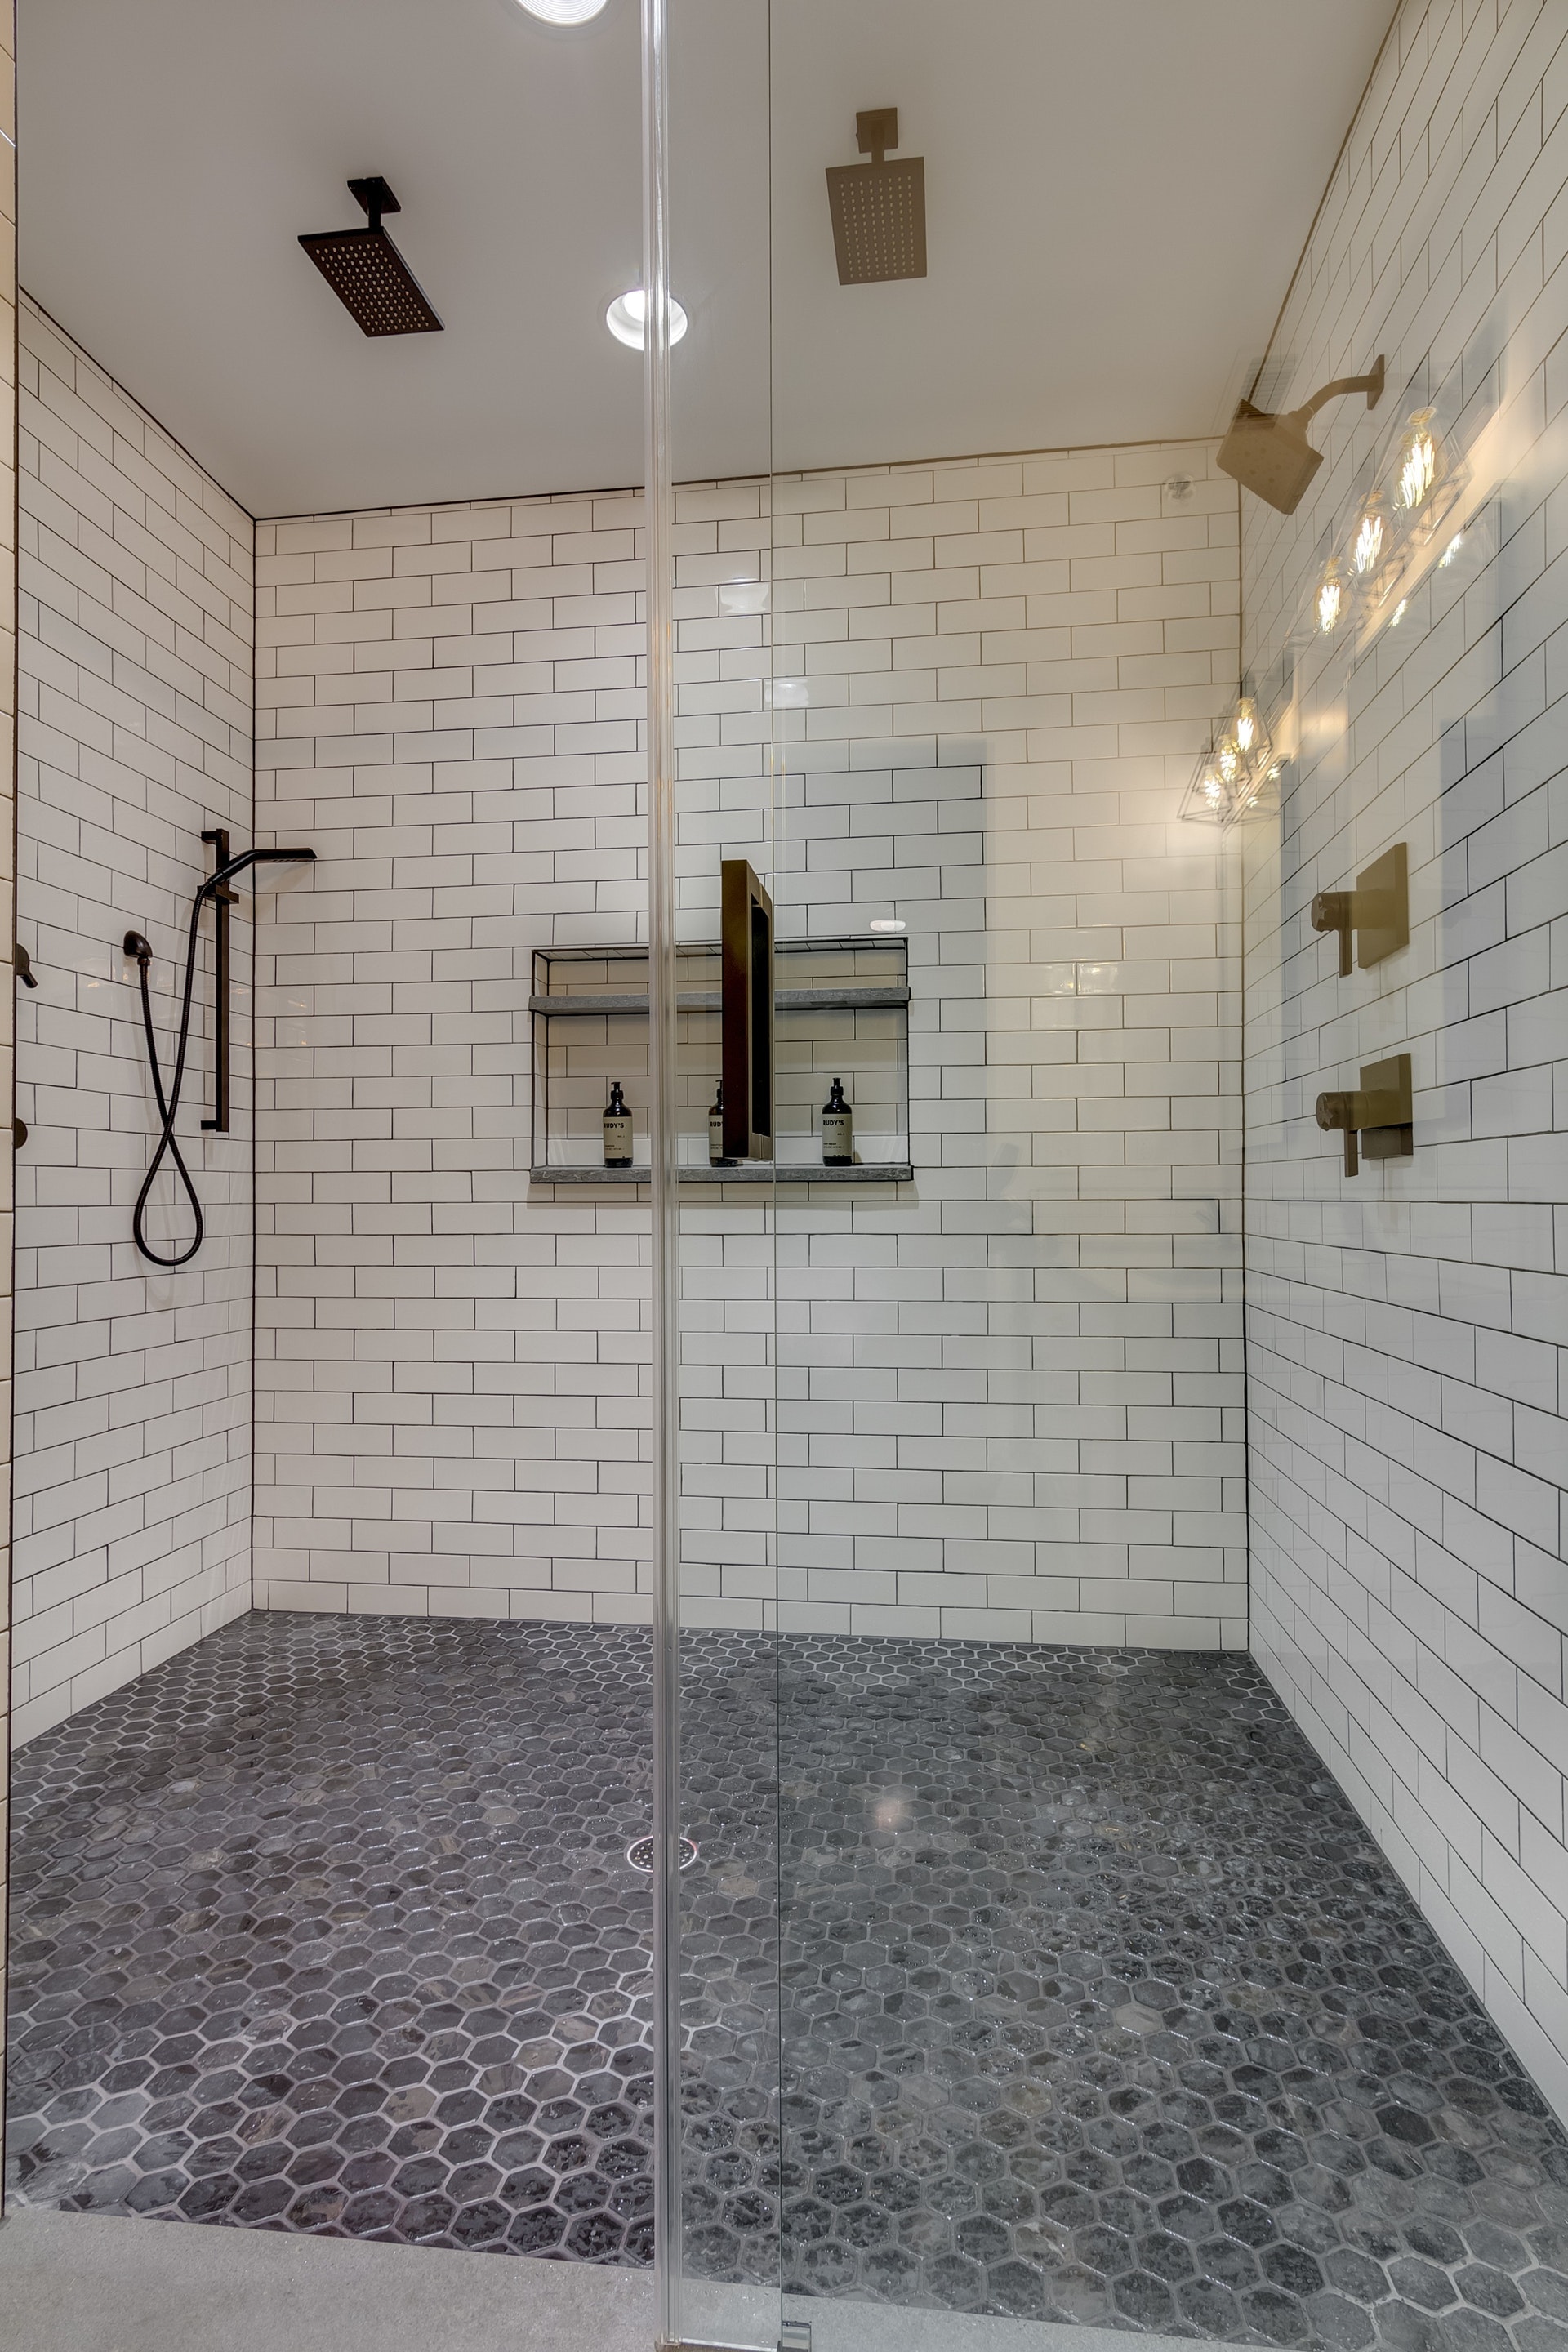 Large white tile with dark grout walk in shower glass door gray hexagon tile floor